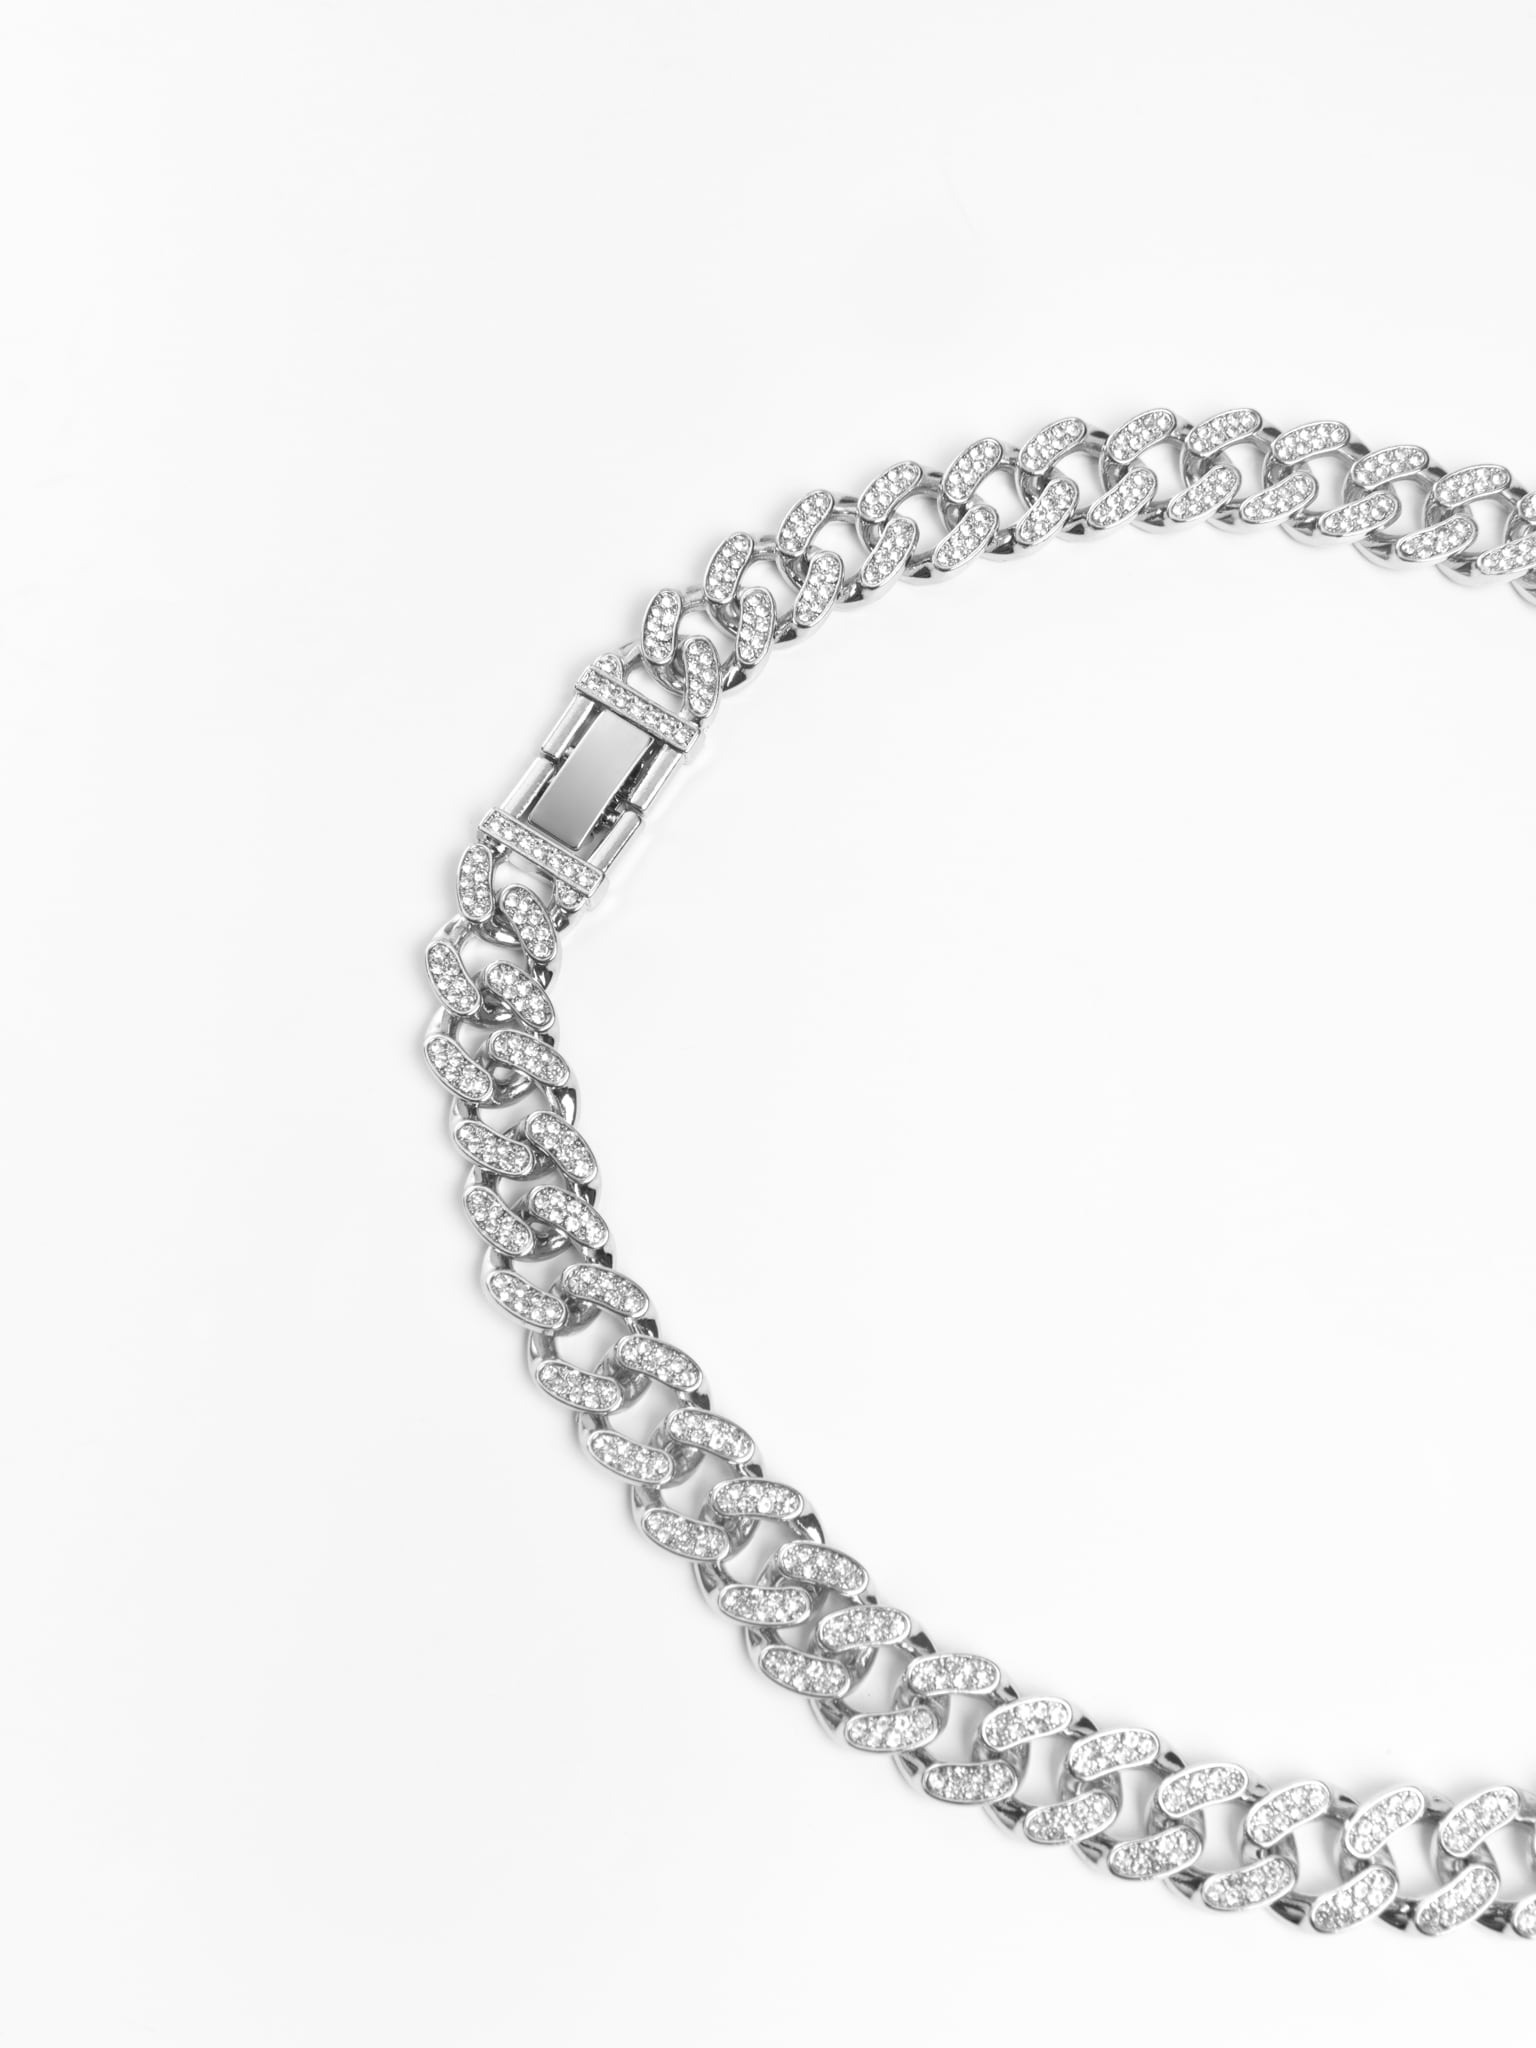 Rhinestone chain necklace